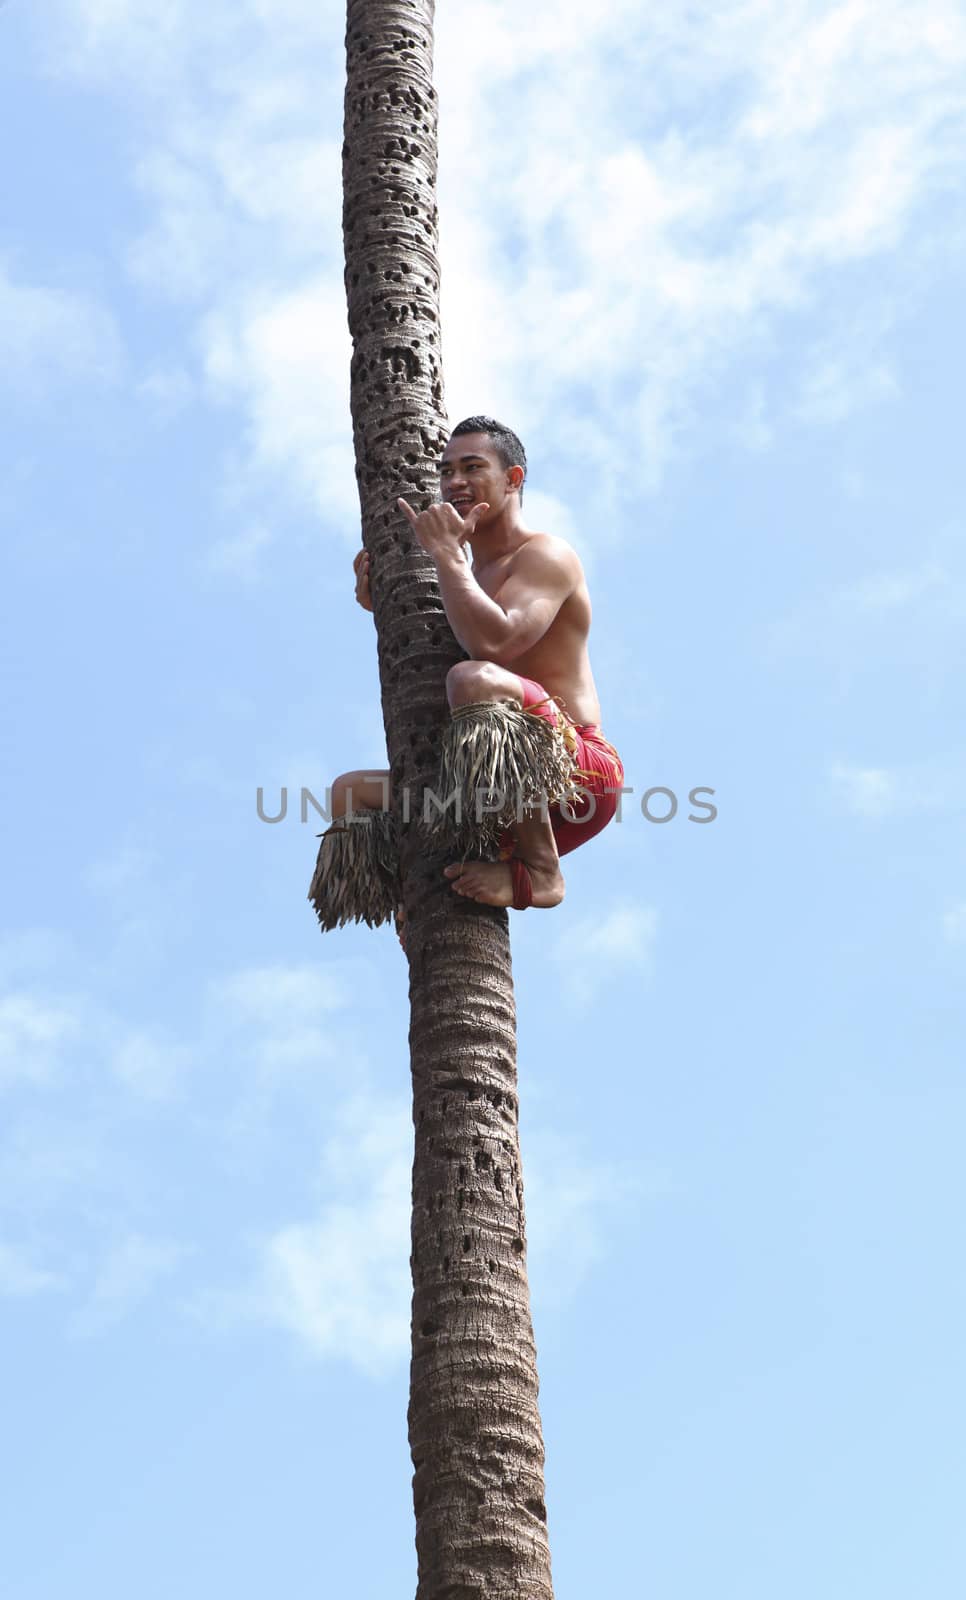 Climbing coconut tree at Polynesian Cultural Center in Oahu Hawaii